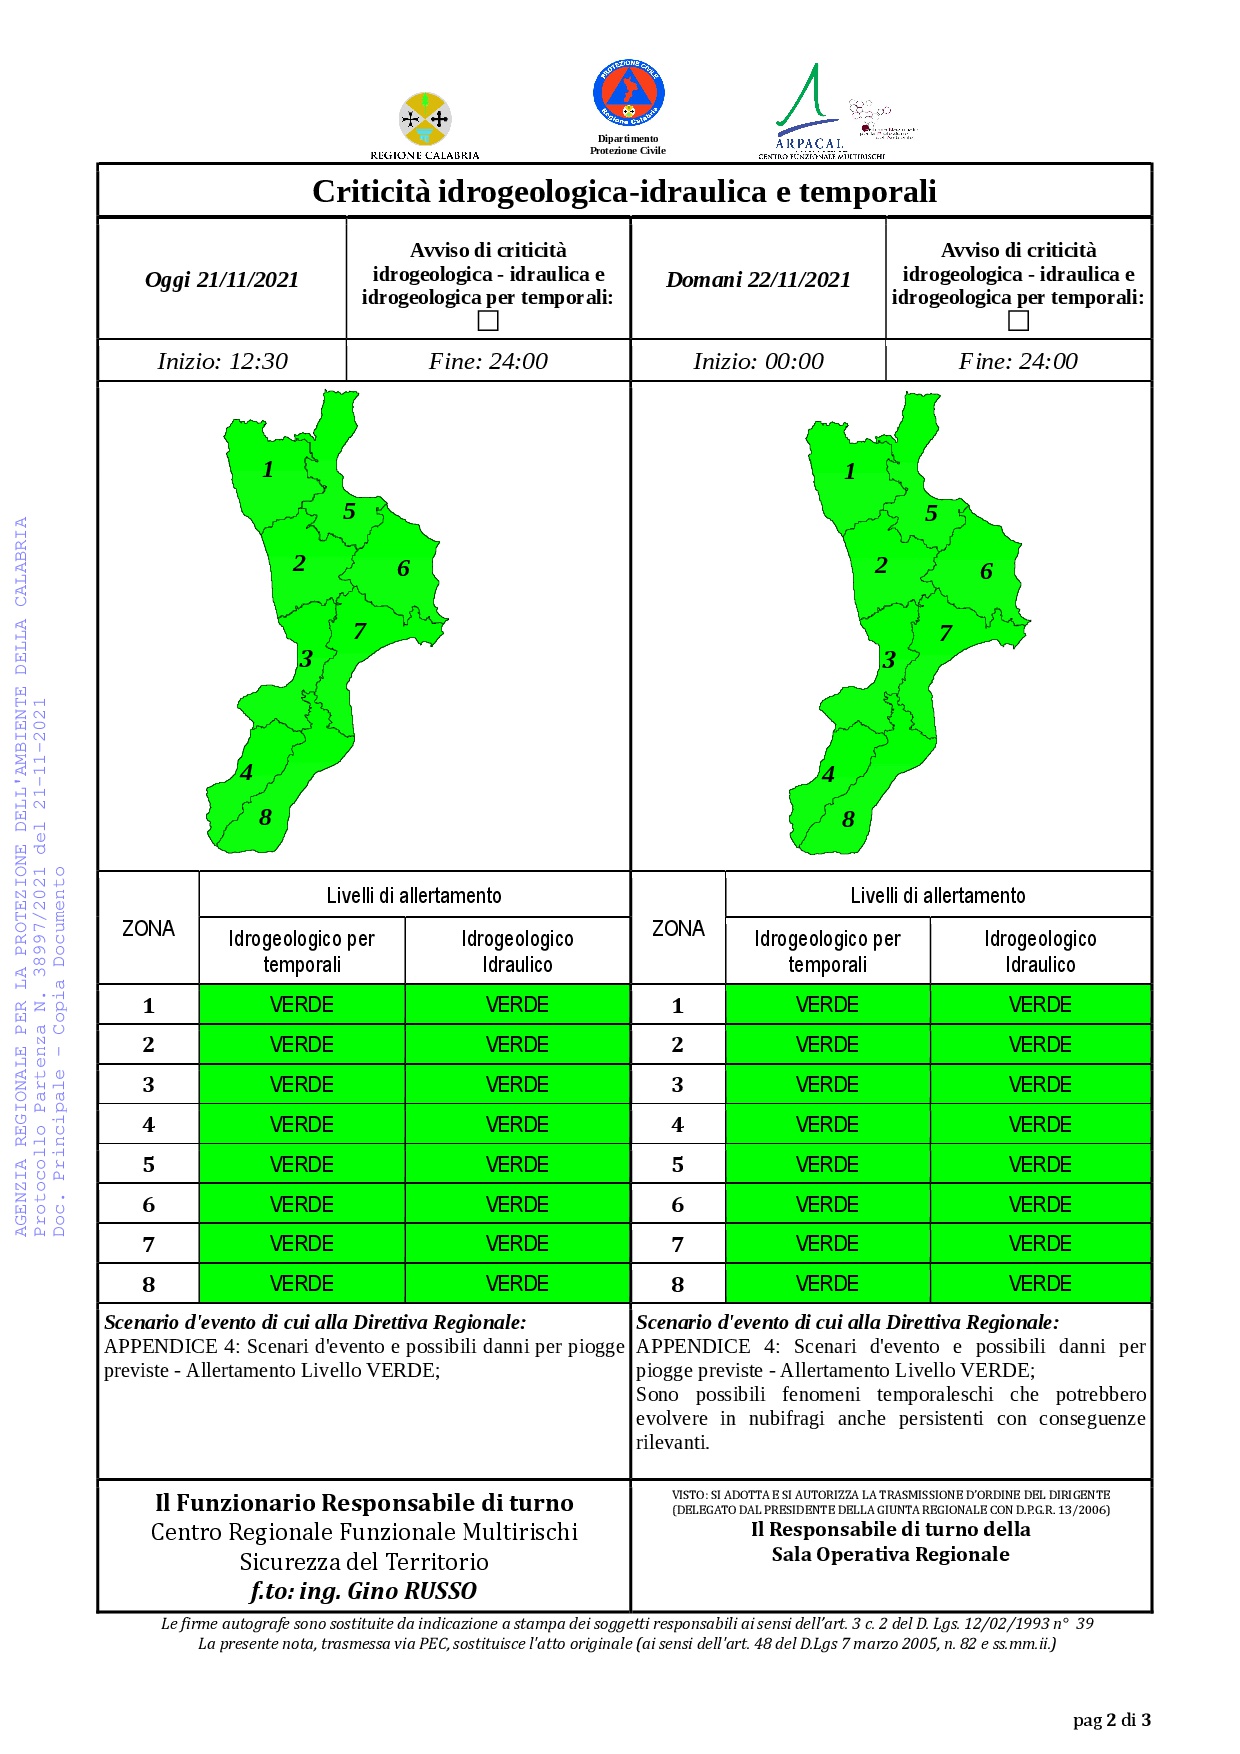 Criticità idrogeologica-idraulica e temporali in Calabria 21-11-2021